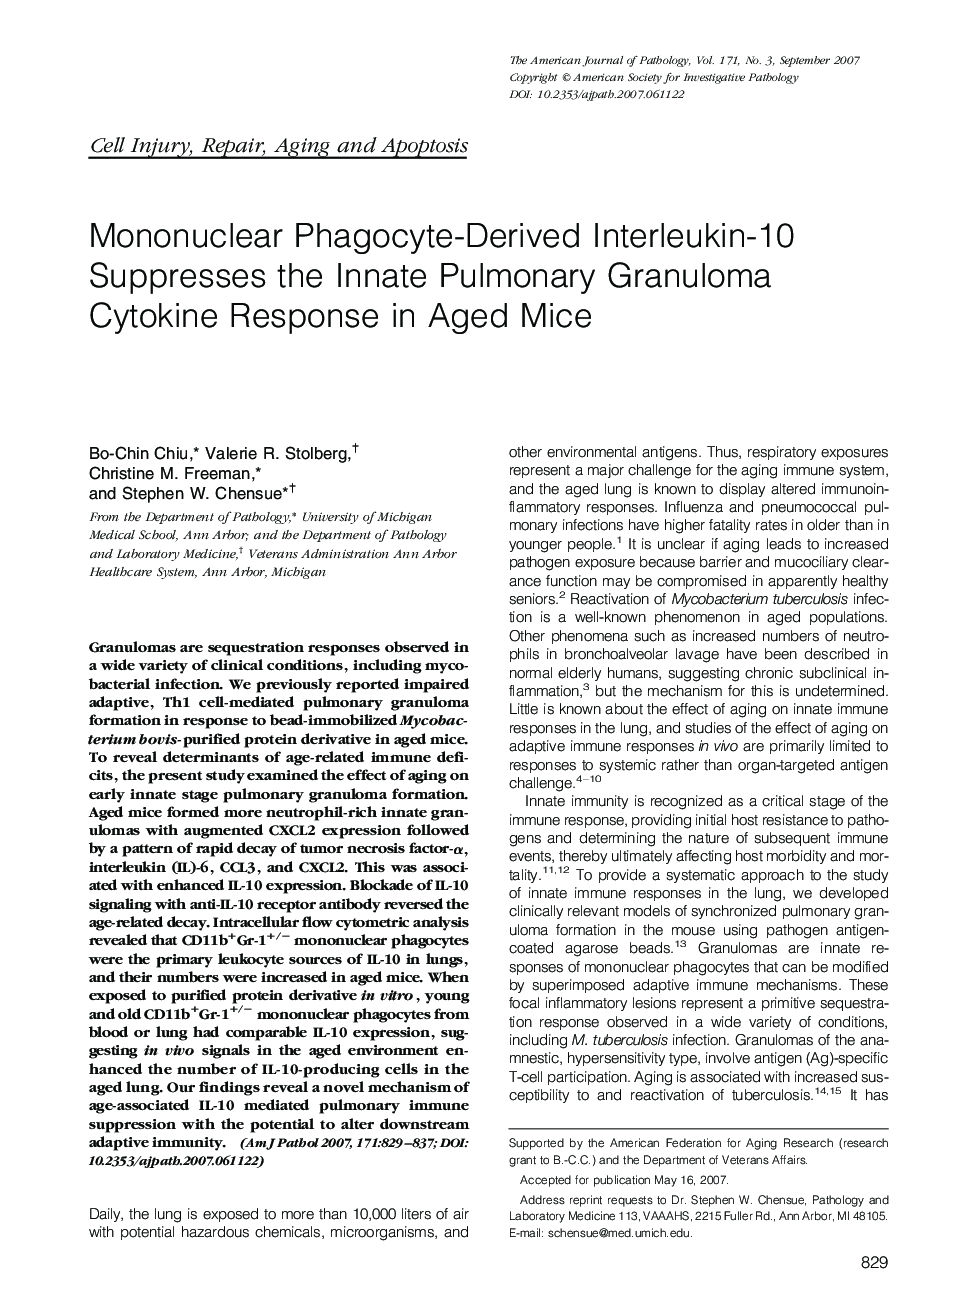 Regular ArticlesMononuclear Phagocyte-Derived Interleukin-10 Suppresses the Innate Pulmonary Granuloma Cytokine Response in Aged Mice